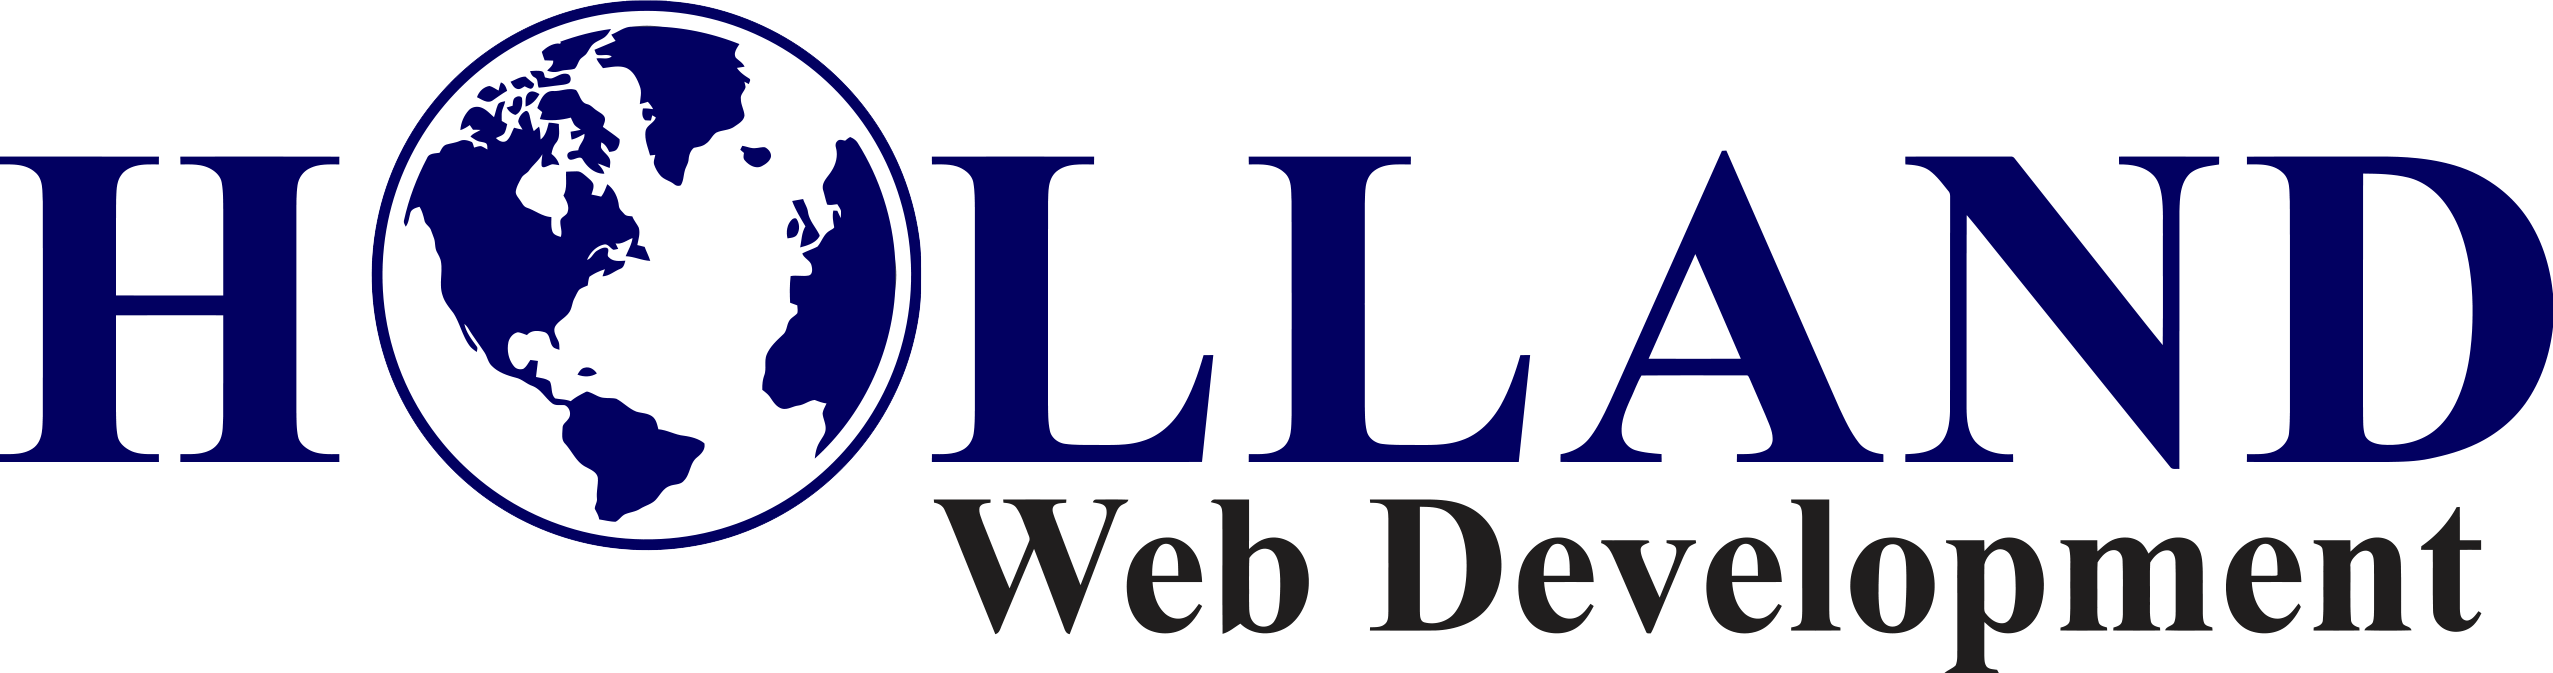 Holland Web Development